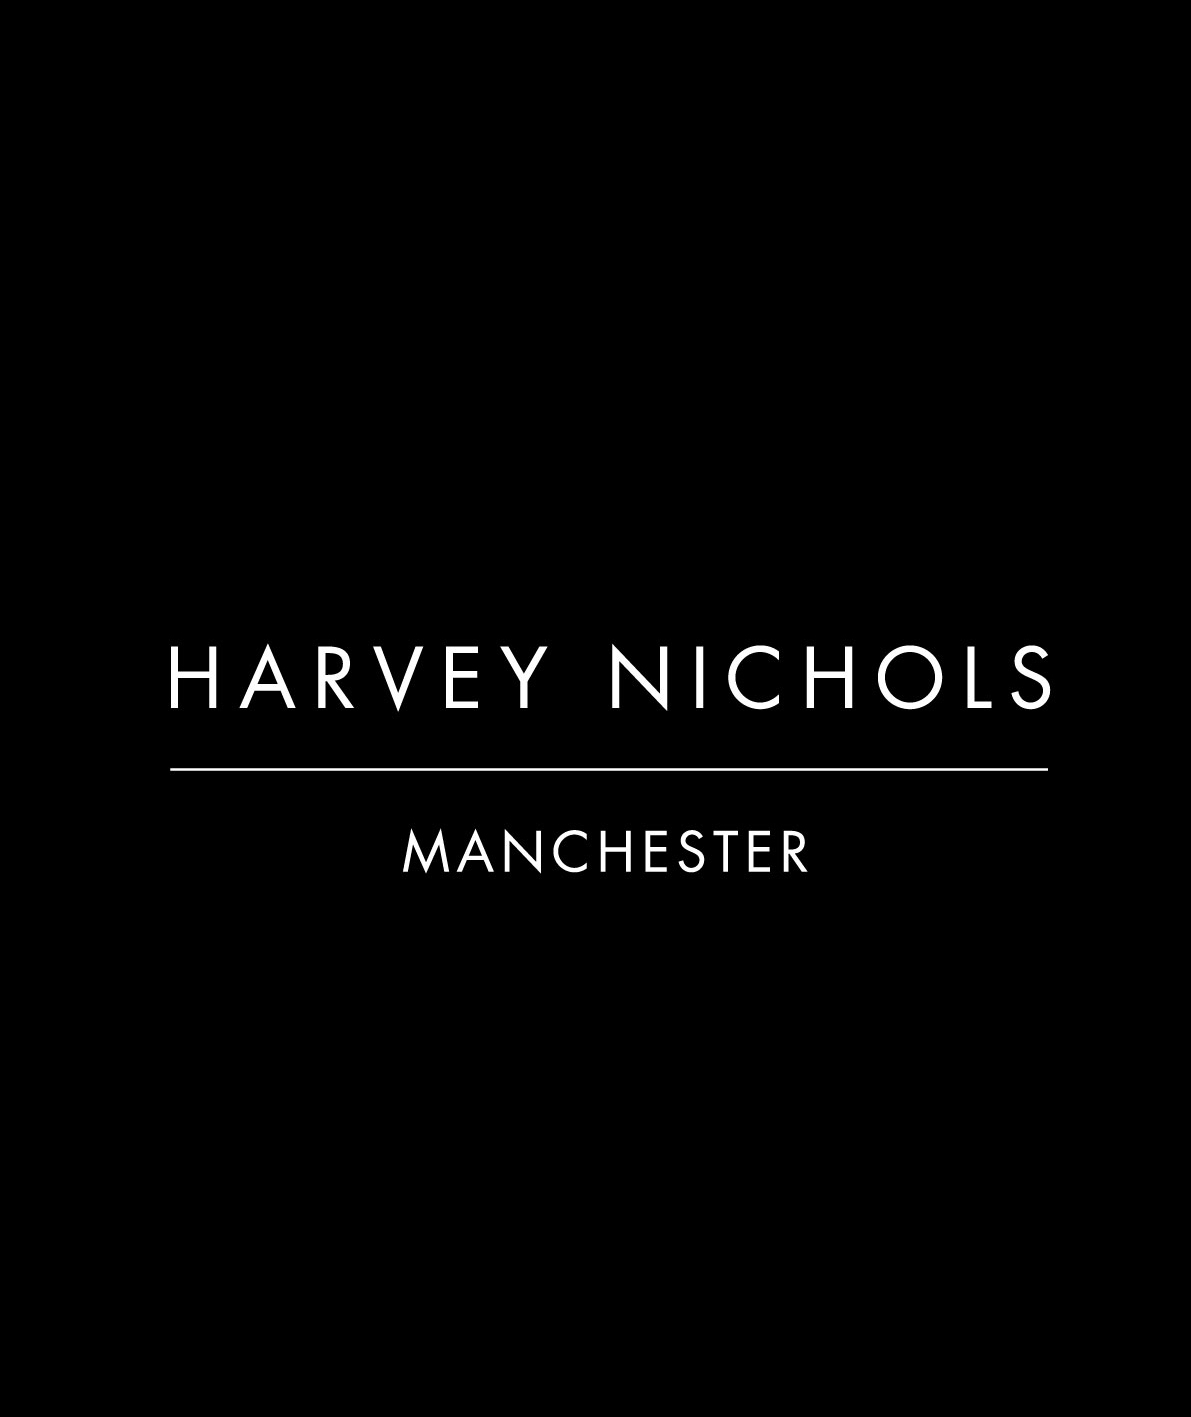 Harvey-Nichols-Manchester-BlackWhit.jpg